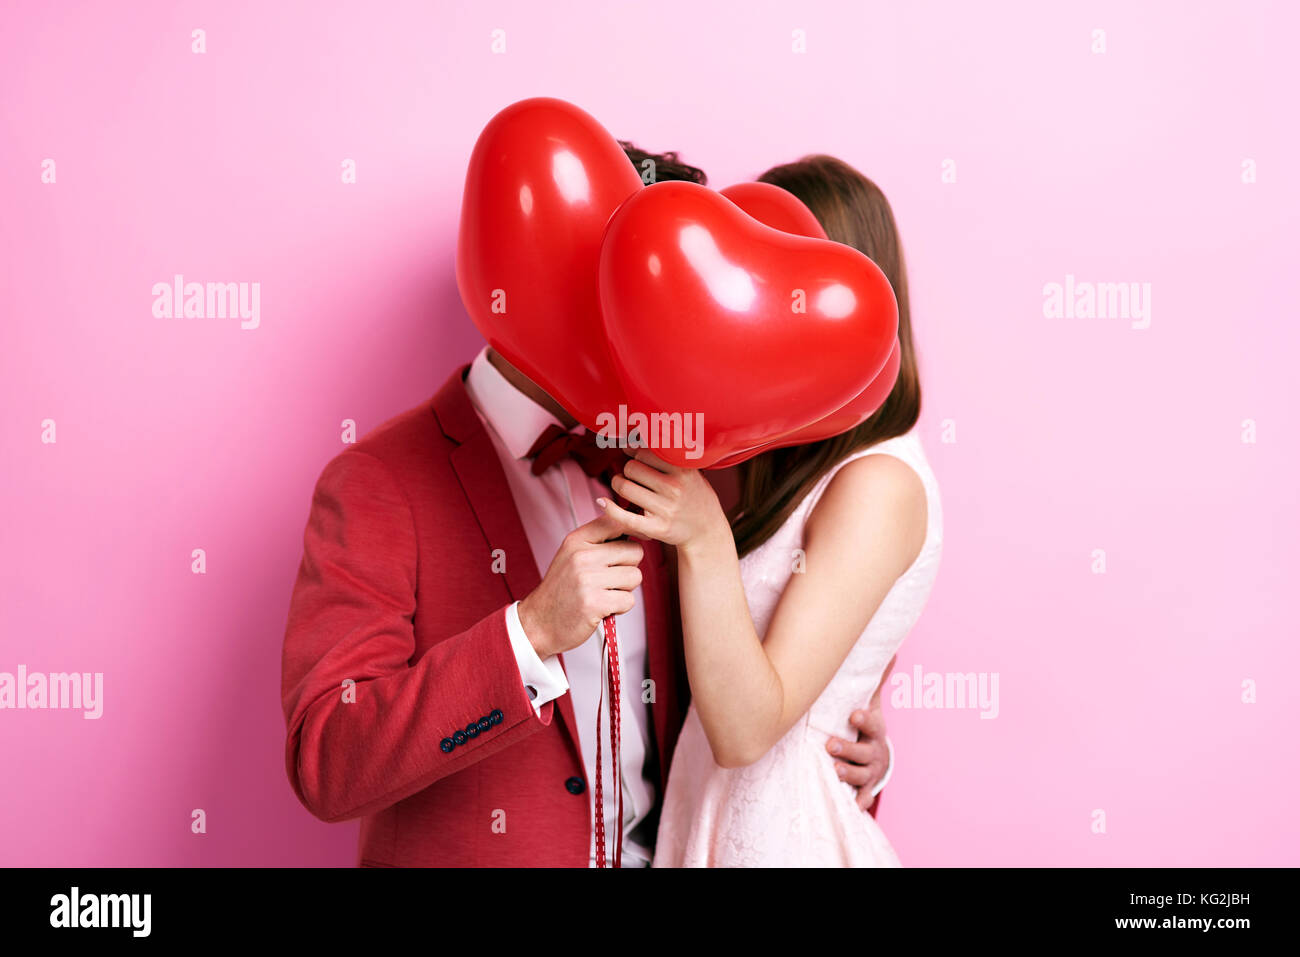 Couple kissing behind balloons Stock Photo